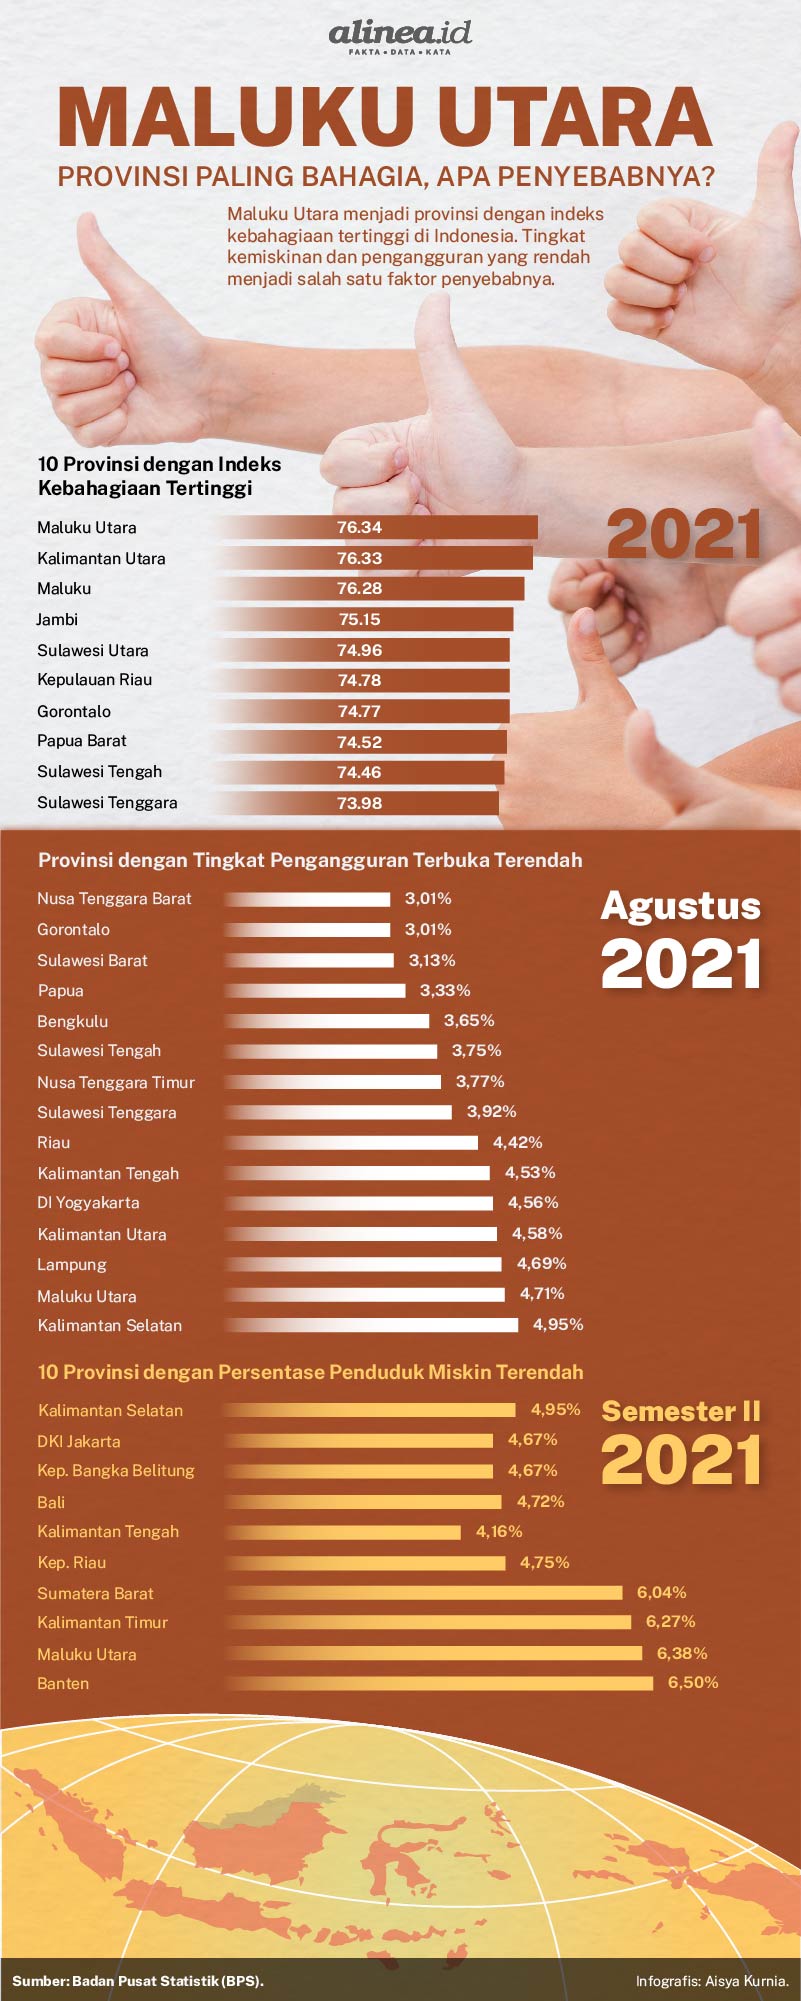 Infografik Indeks Kebahagiaan. Alinea.id/Aisya Kurnia. 